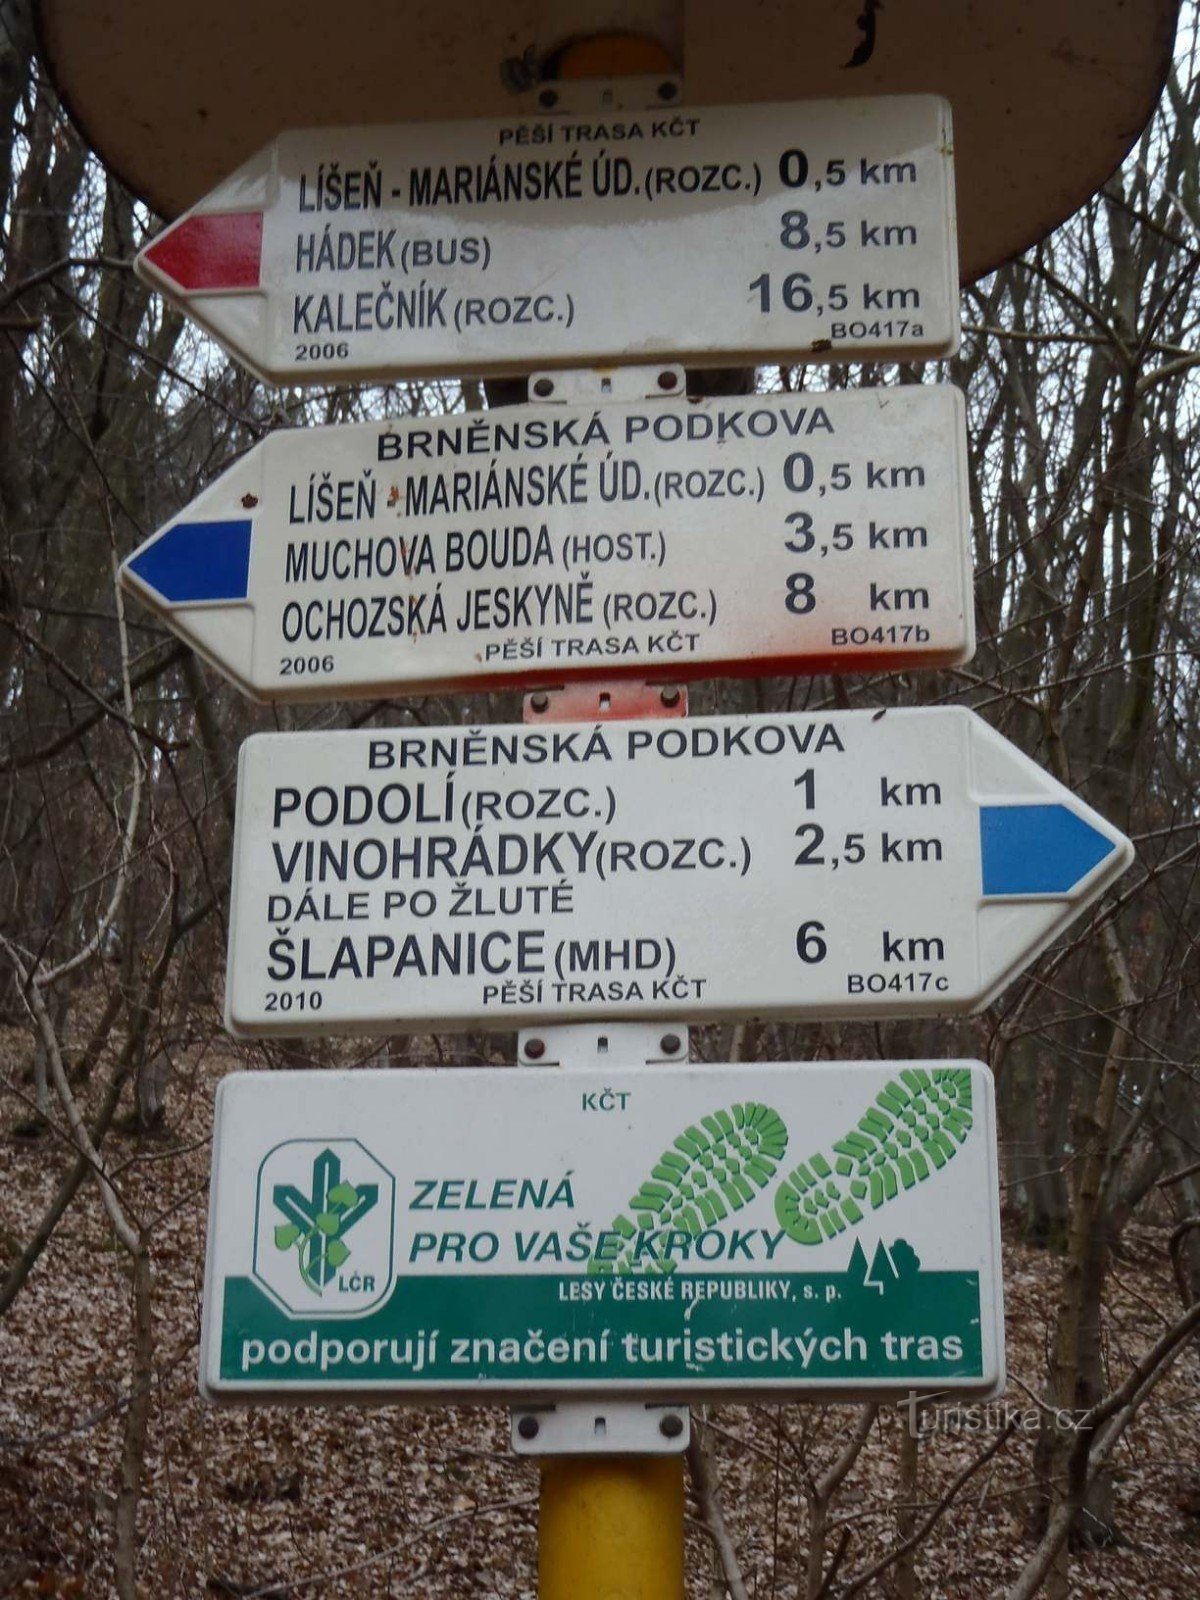 Turistički putokaz Brno Líšeň Mariánské údolí Javni prijevoz - 6.2.2012. veljače XNUMX.